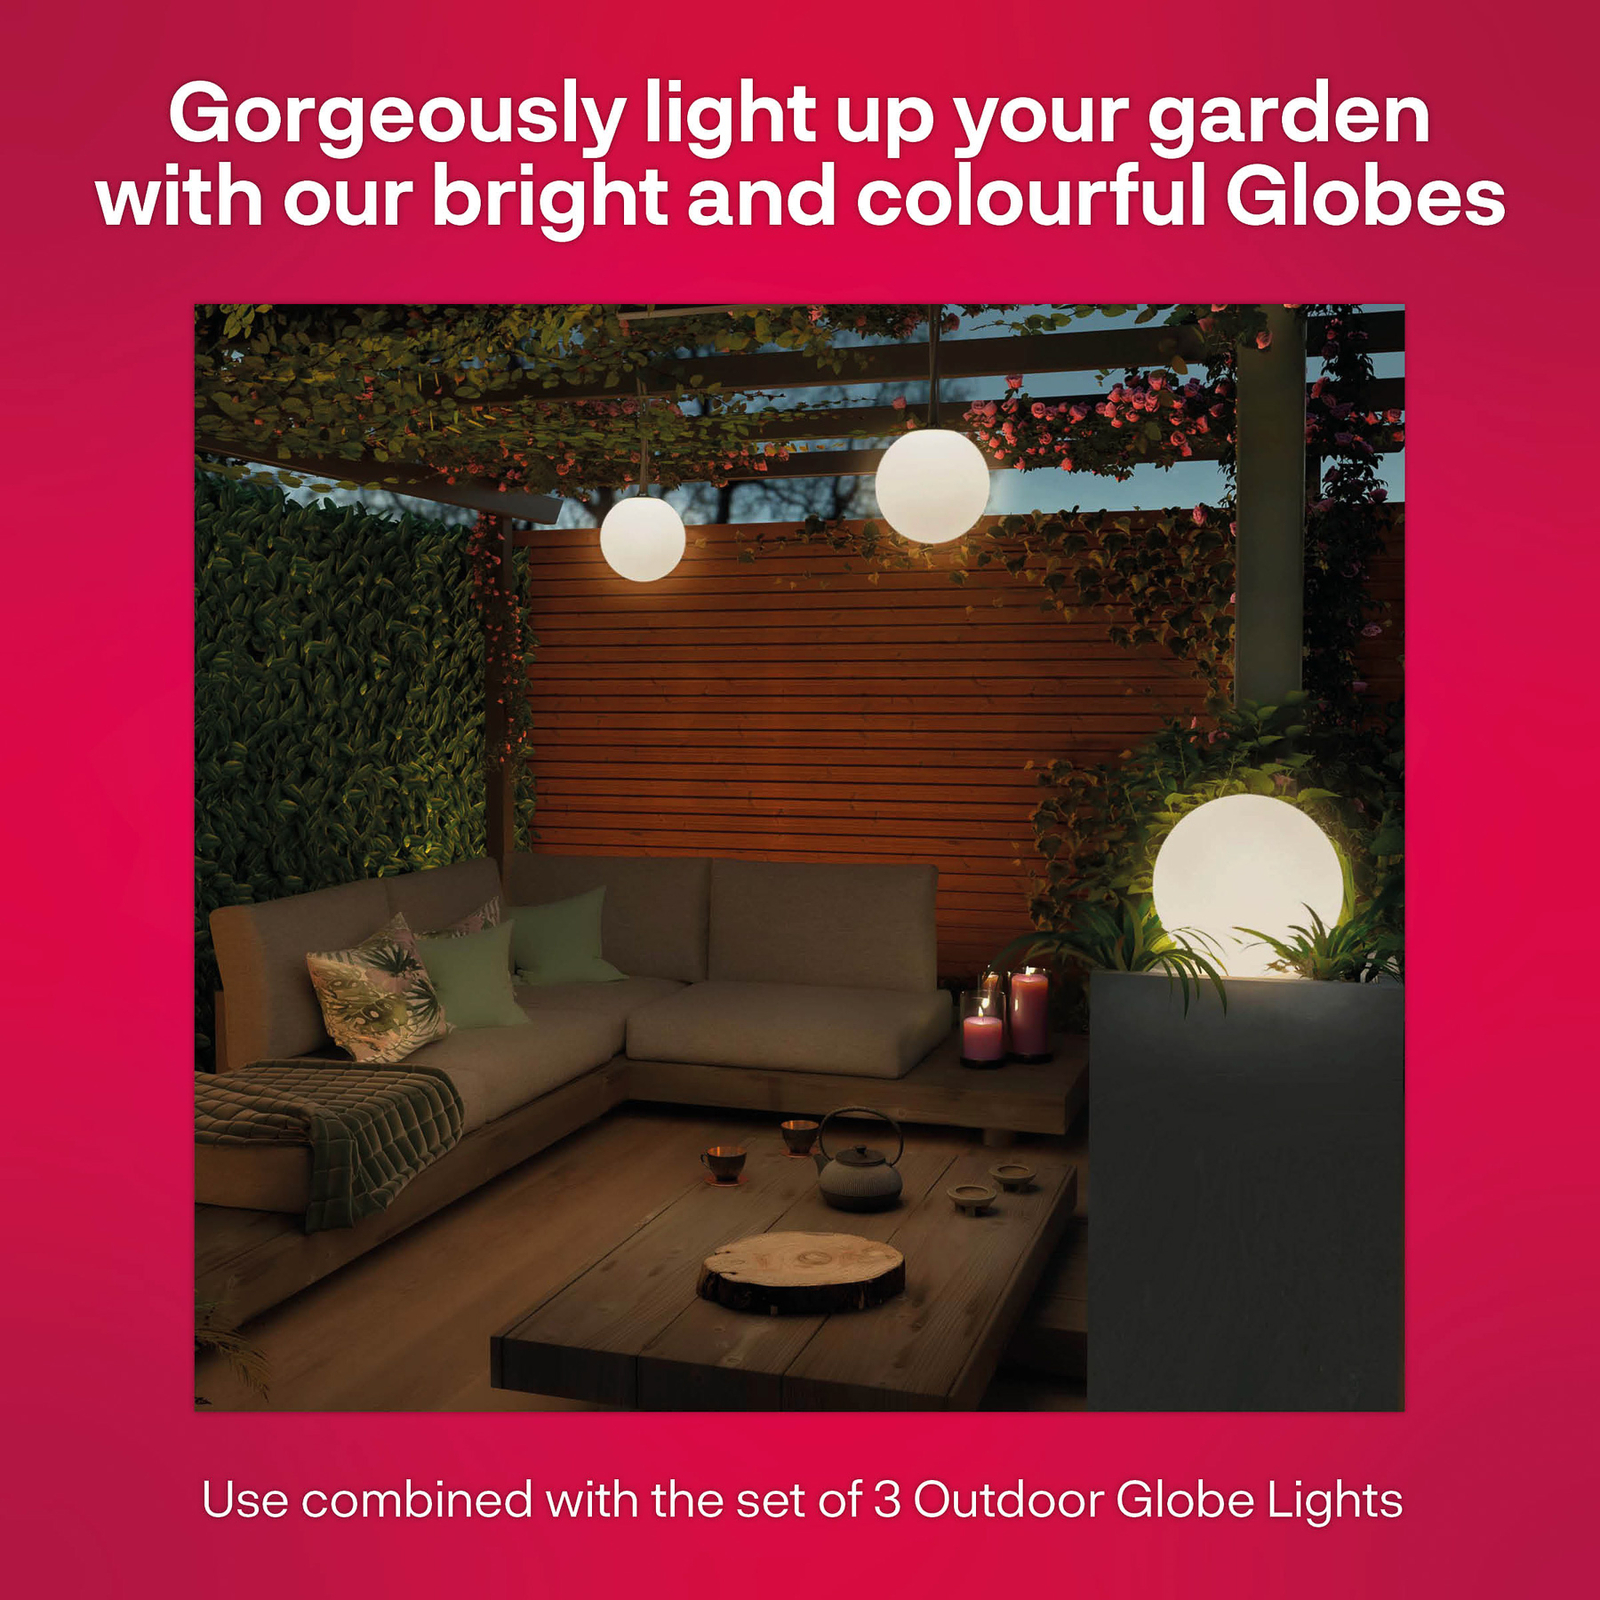 Innr Smart Outdoor Globe Colour LED globe addition